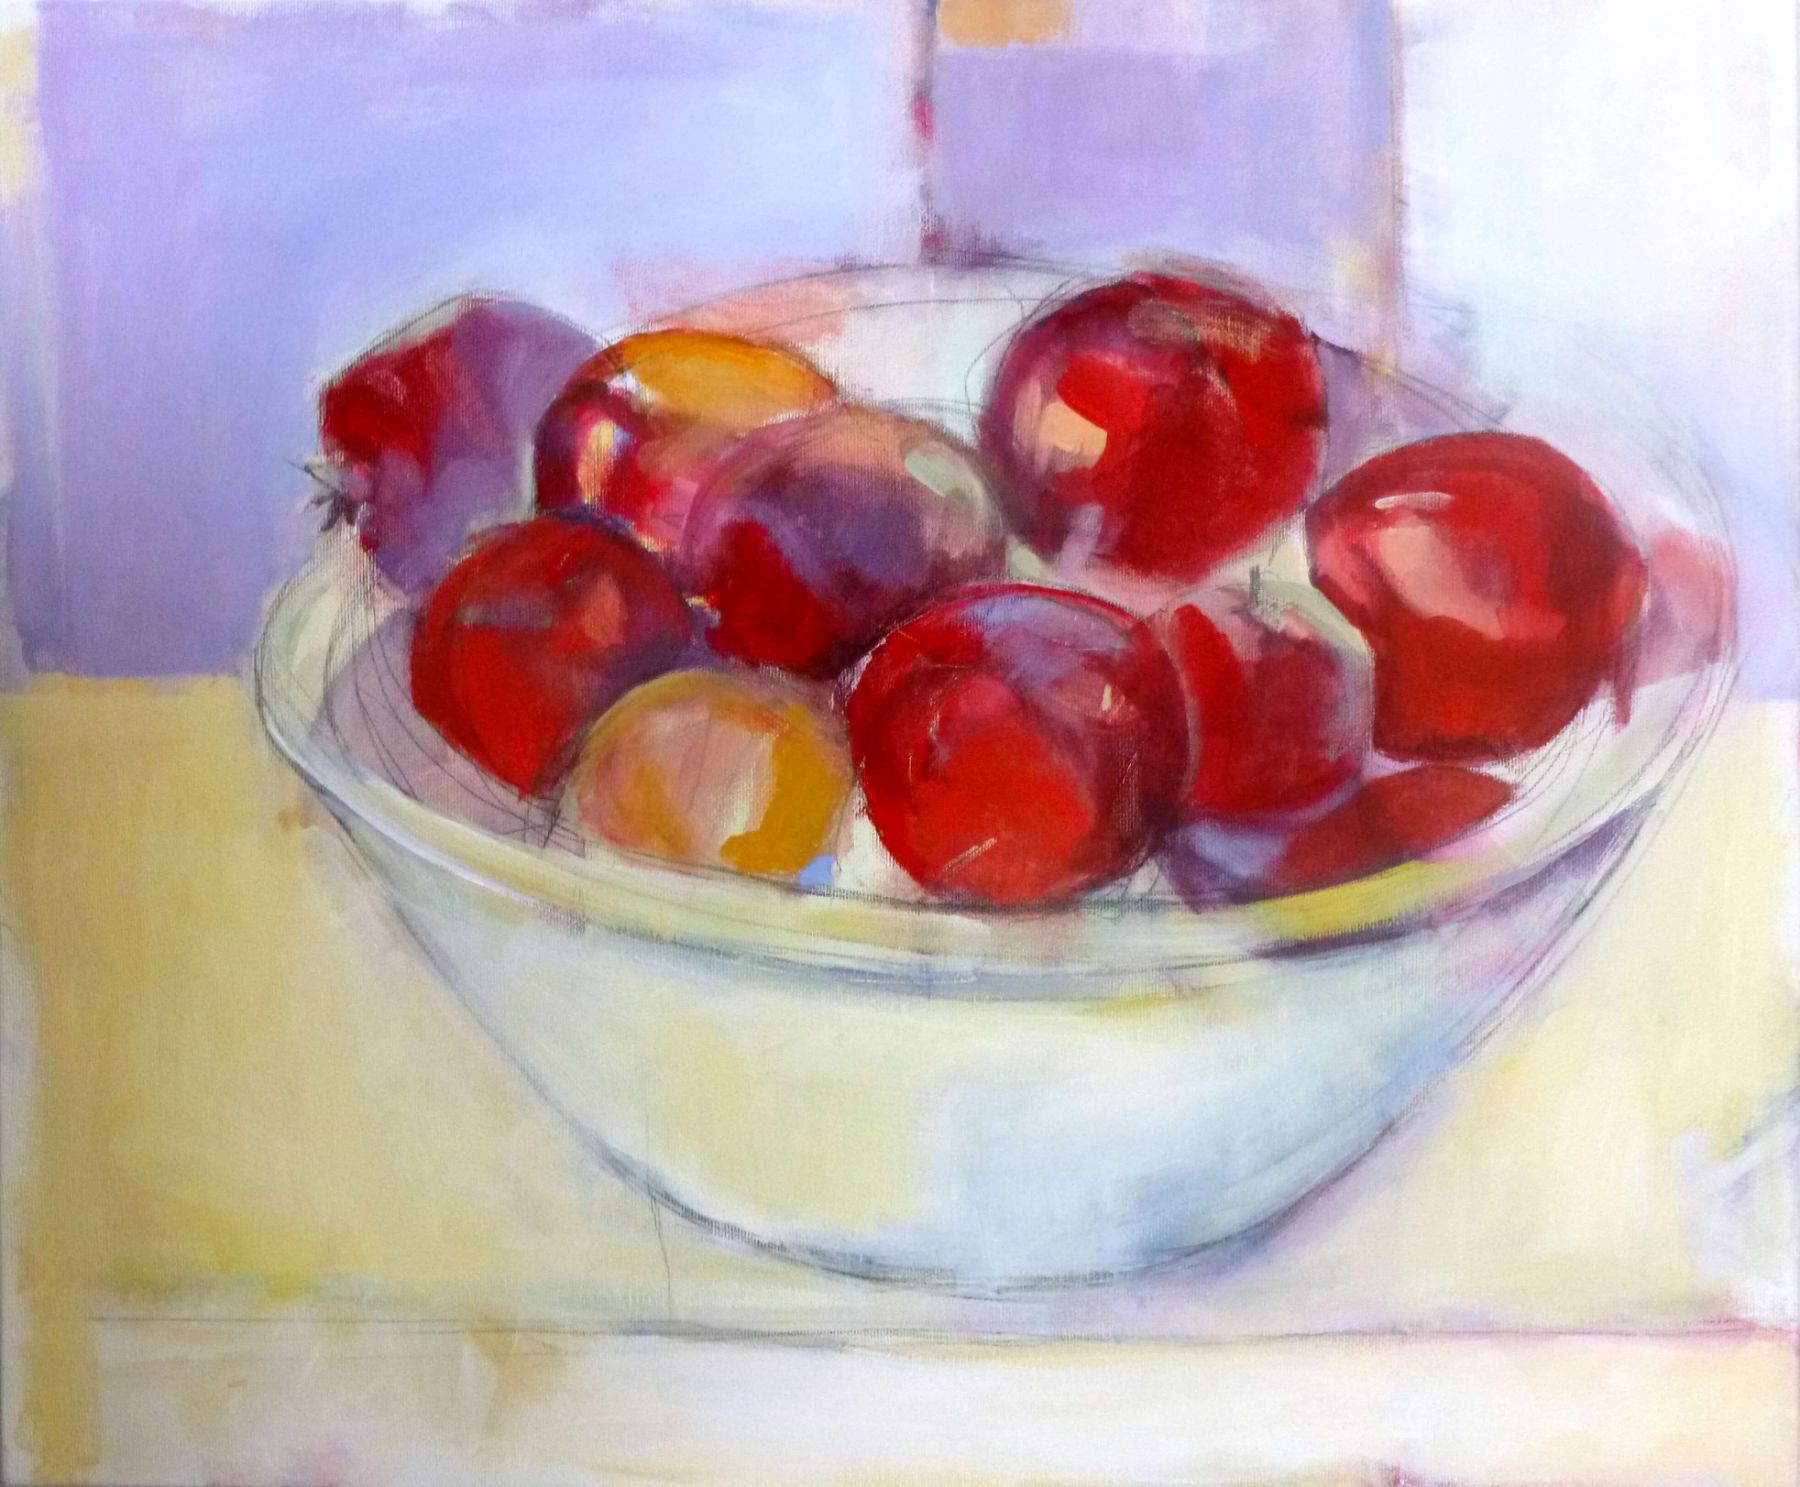 Pomegranates In A Bowl - painting, acrylic on canvas by artist Neva Bergemann